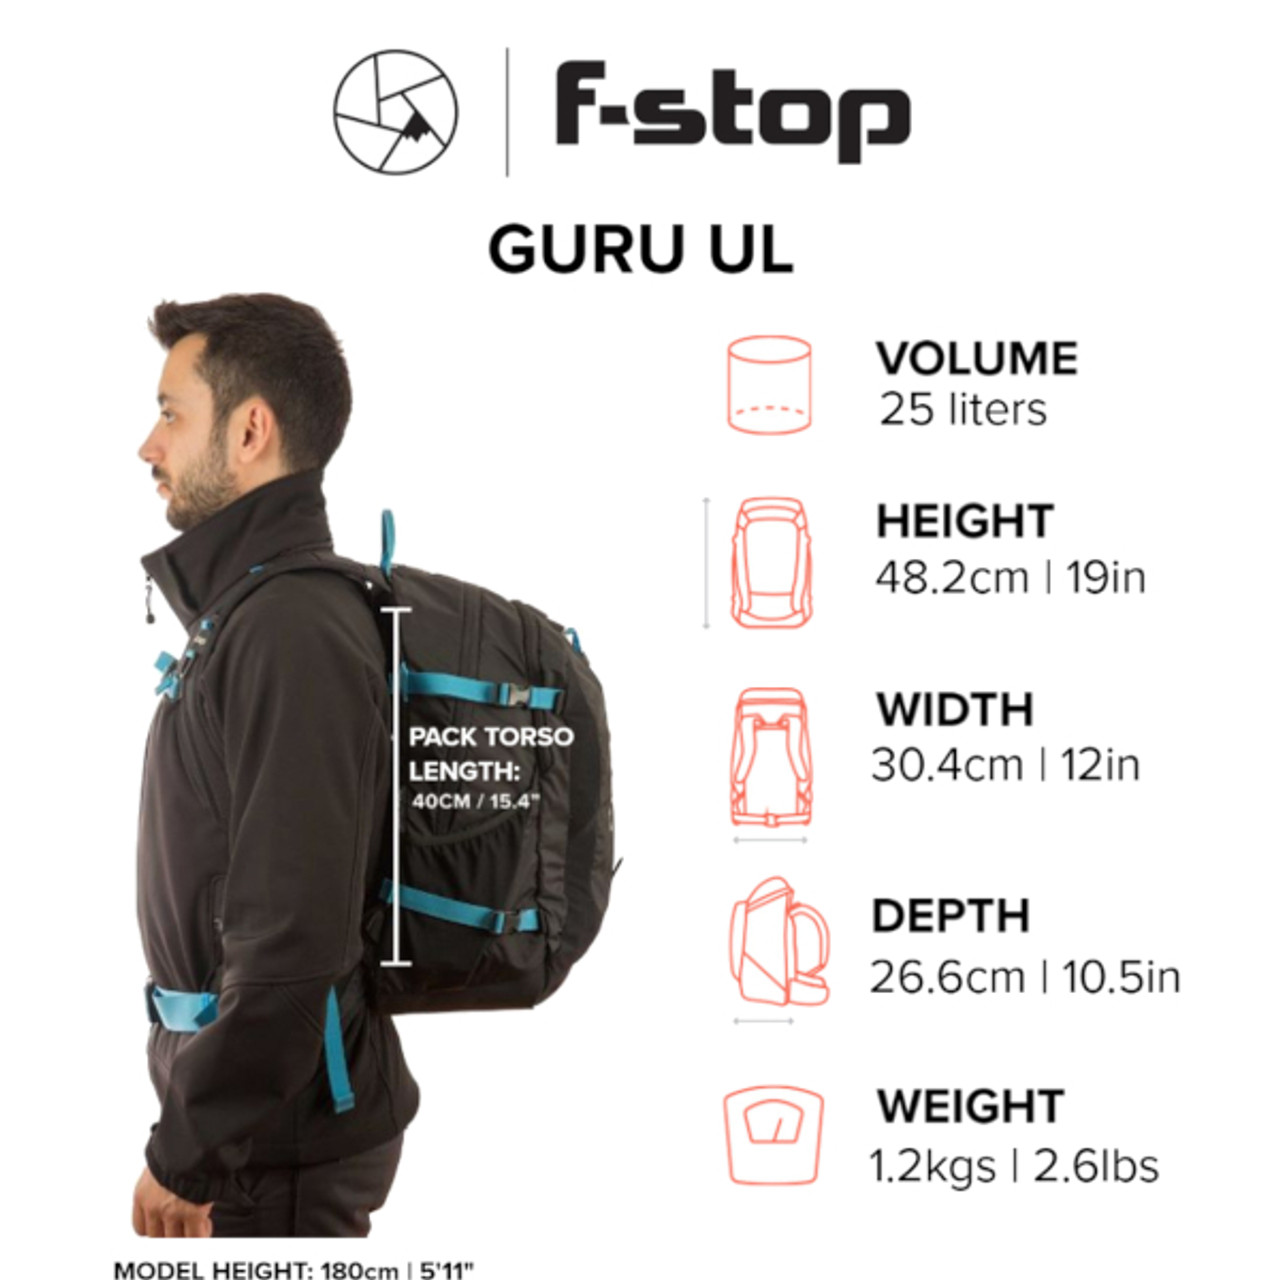 F-stop Guru Ultra Light 25L Essential Bundle